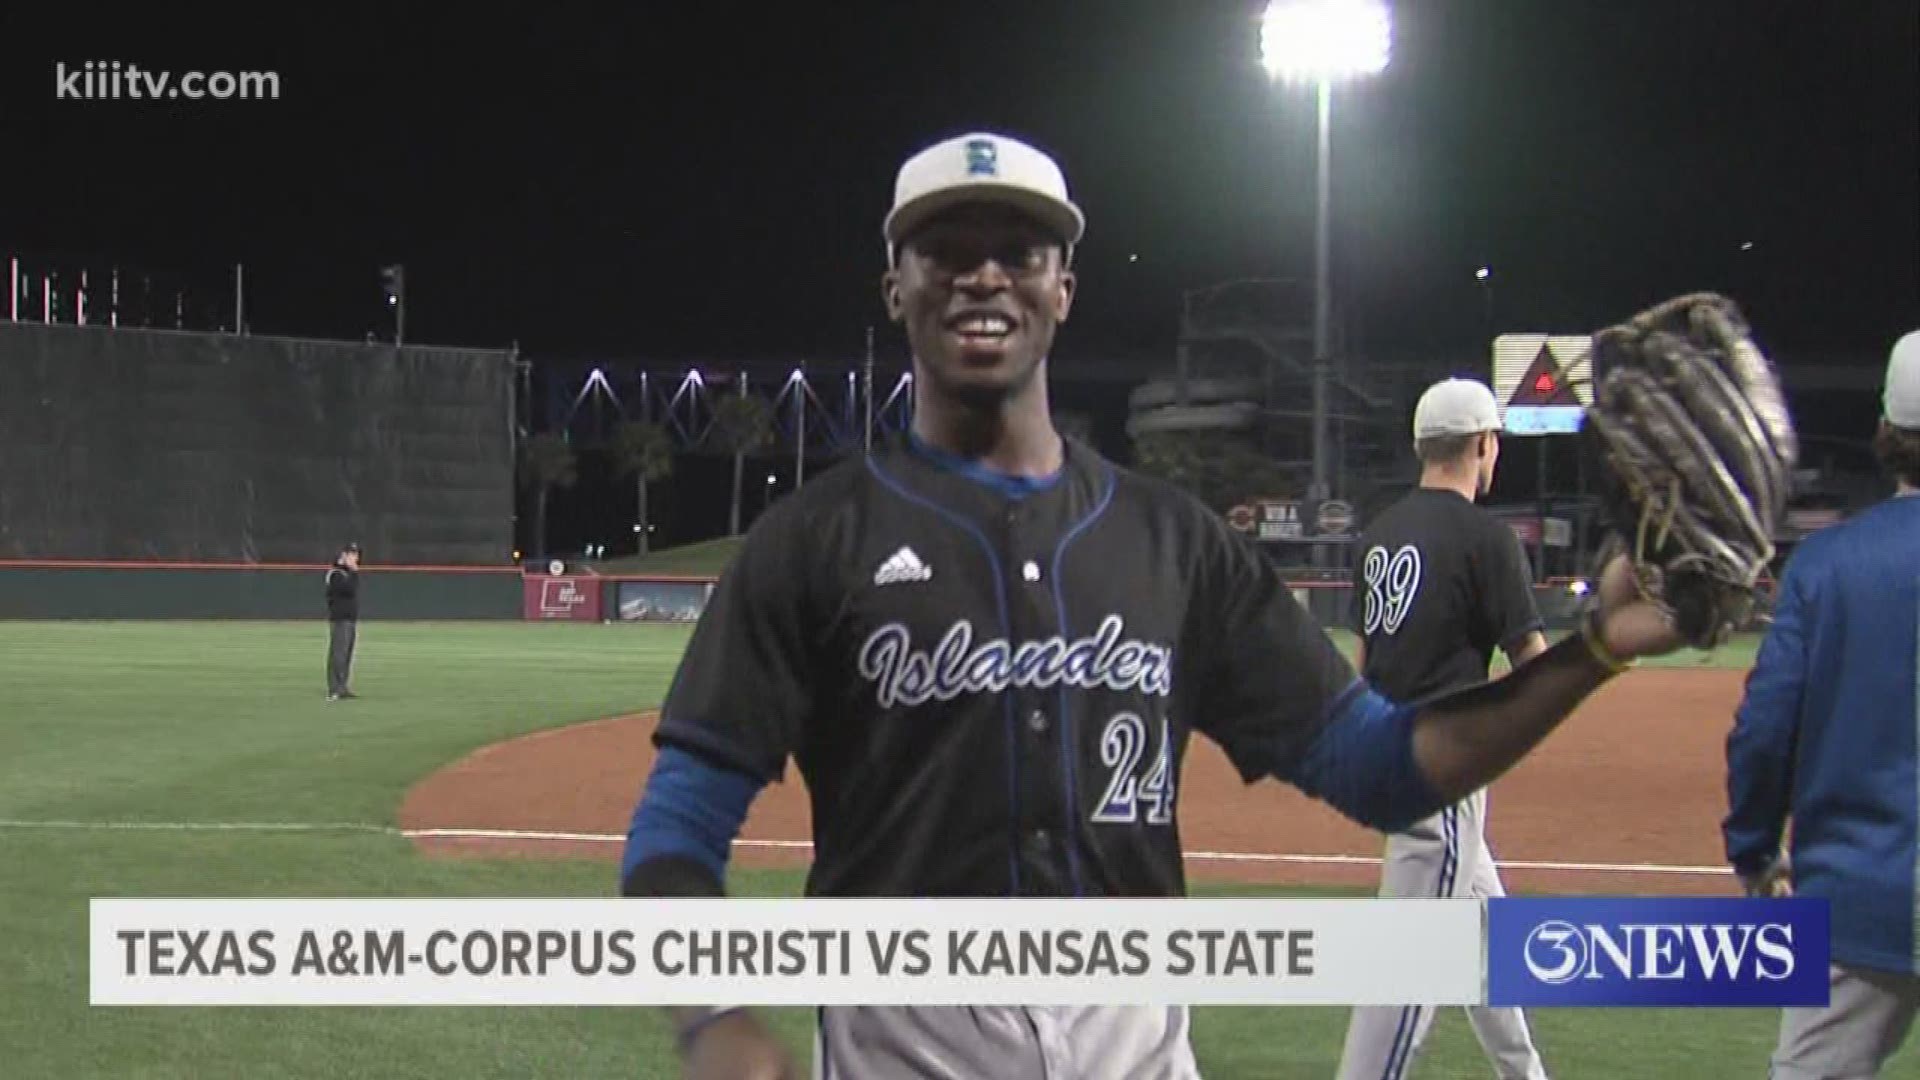 Texas A&M-Corpus Christi topped Kansas State 5-3 in the Kleberg Classic.